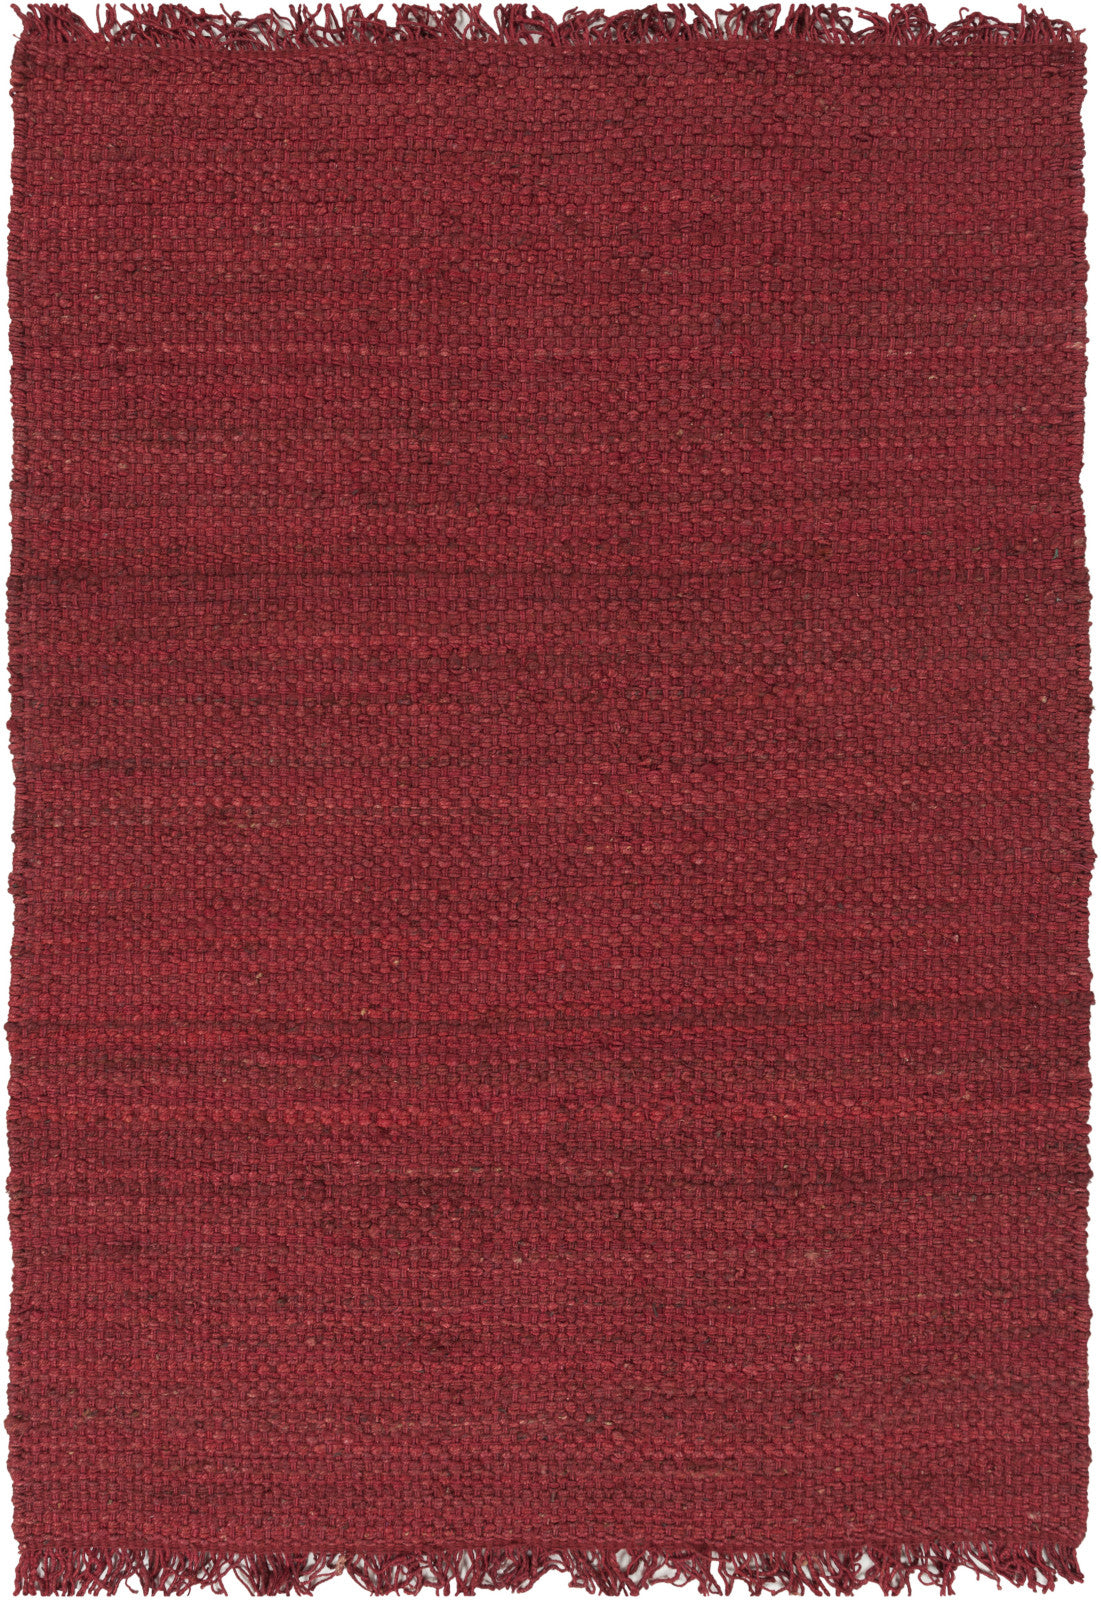 Artistic Weavers Tropica Harper Crimson Red Area Rug main image